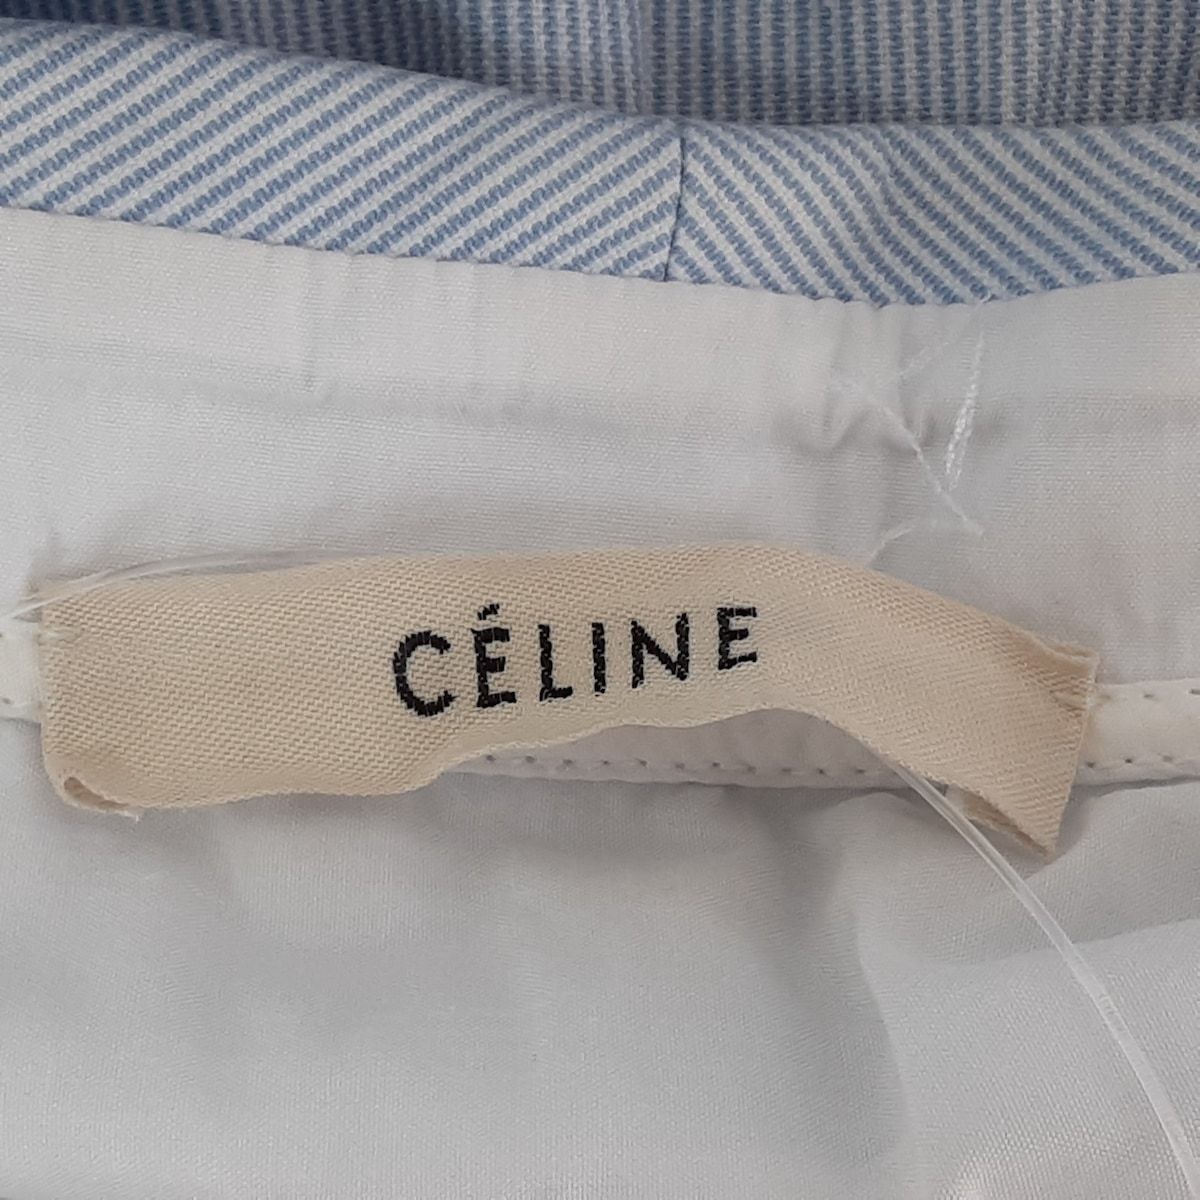 CELINE(セリーヌ) 長袖シャツブラウス サイズ36 S レディース - ライトブルー×白 ストライプ - メルカリ